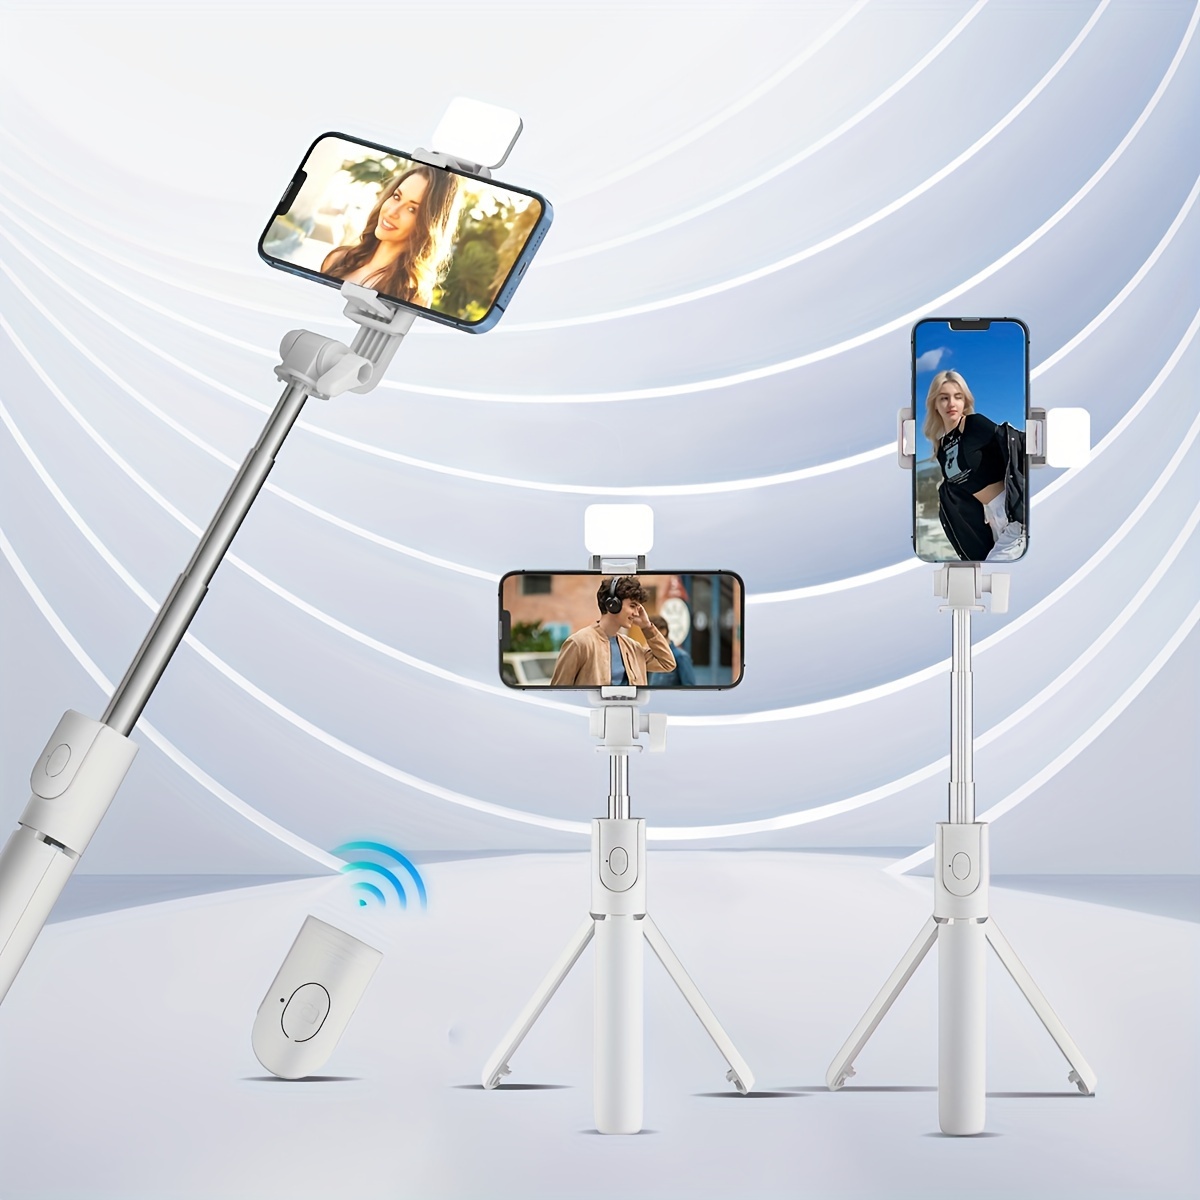 

Mobile Phone Selfie Stick Tripod With 1 Fill Light, Wireless Control Selfie Stick, Handheld 360-degree Rotatable Phone Bracket